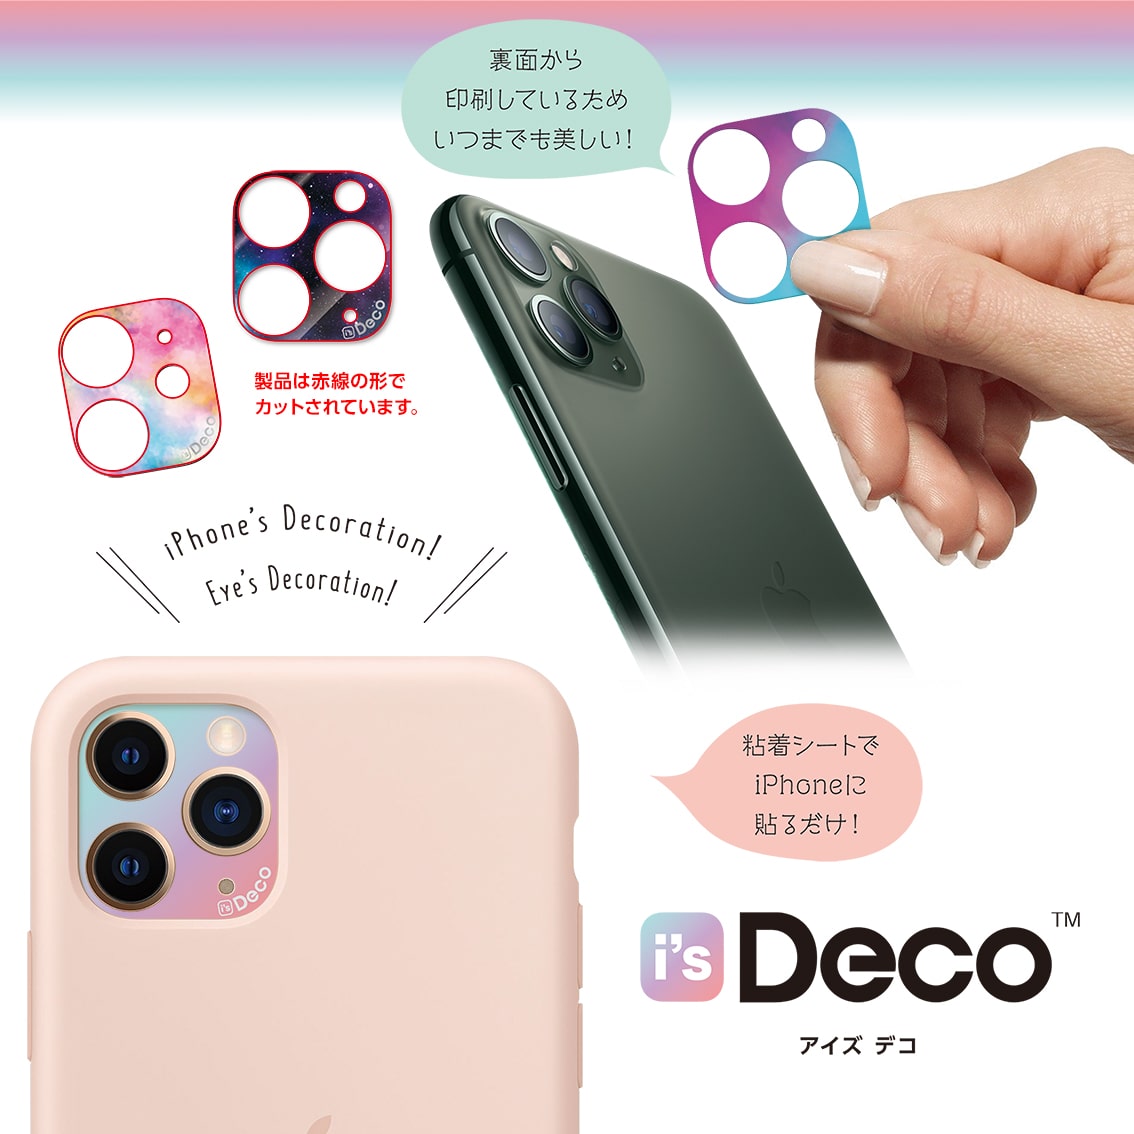 iPhone 11 Pro/11 Pro Max i's Deco [PATTERN (A01-A04)］